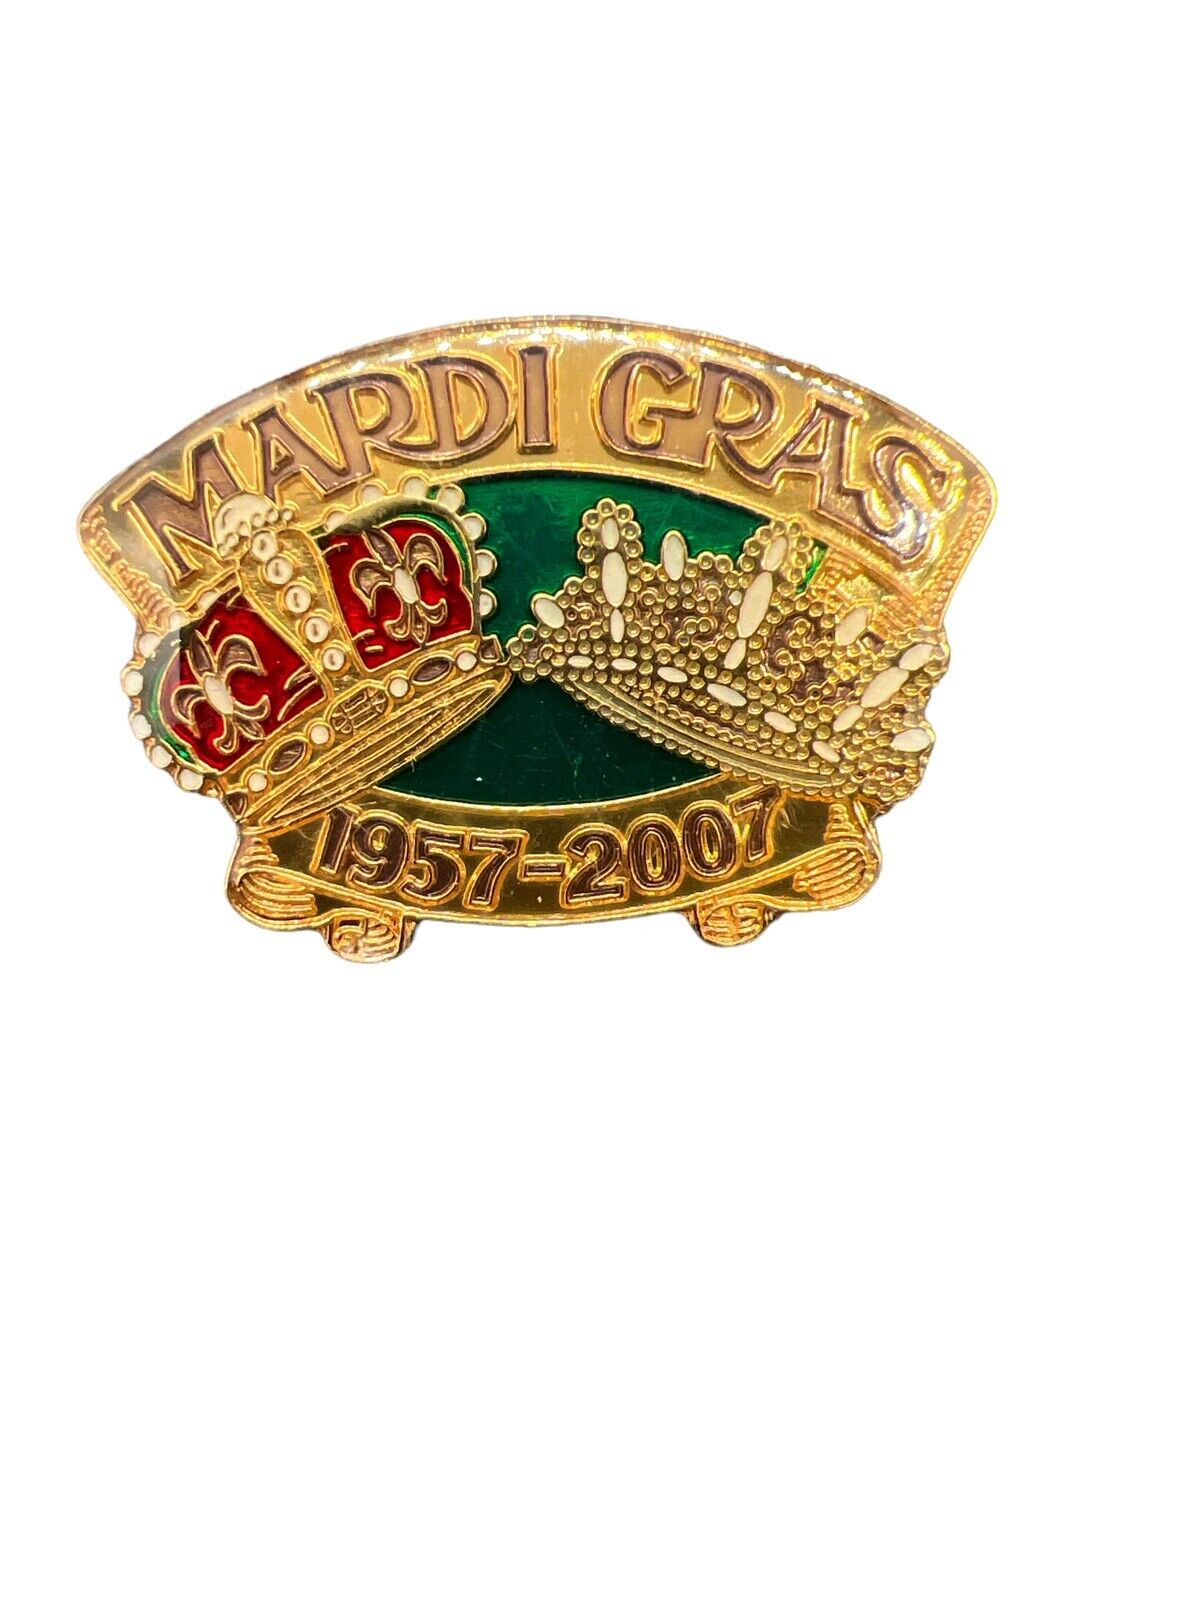 Vintage 2007 Crown  Pin - Mardi Gras